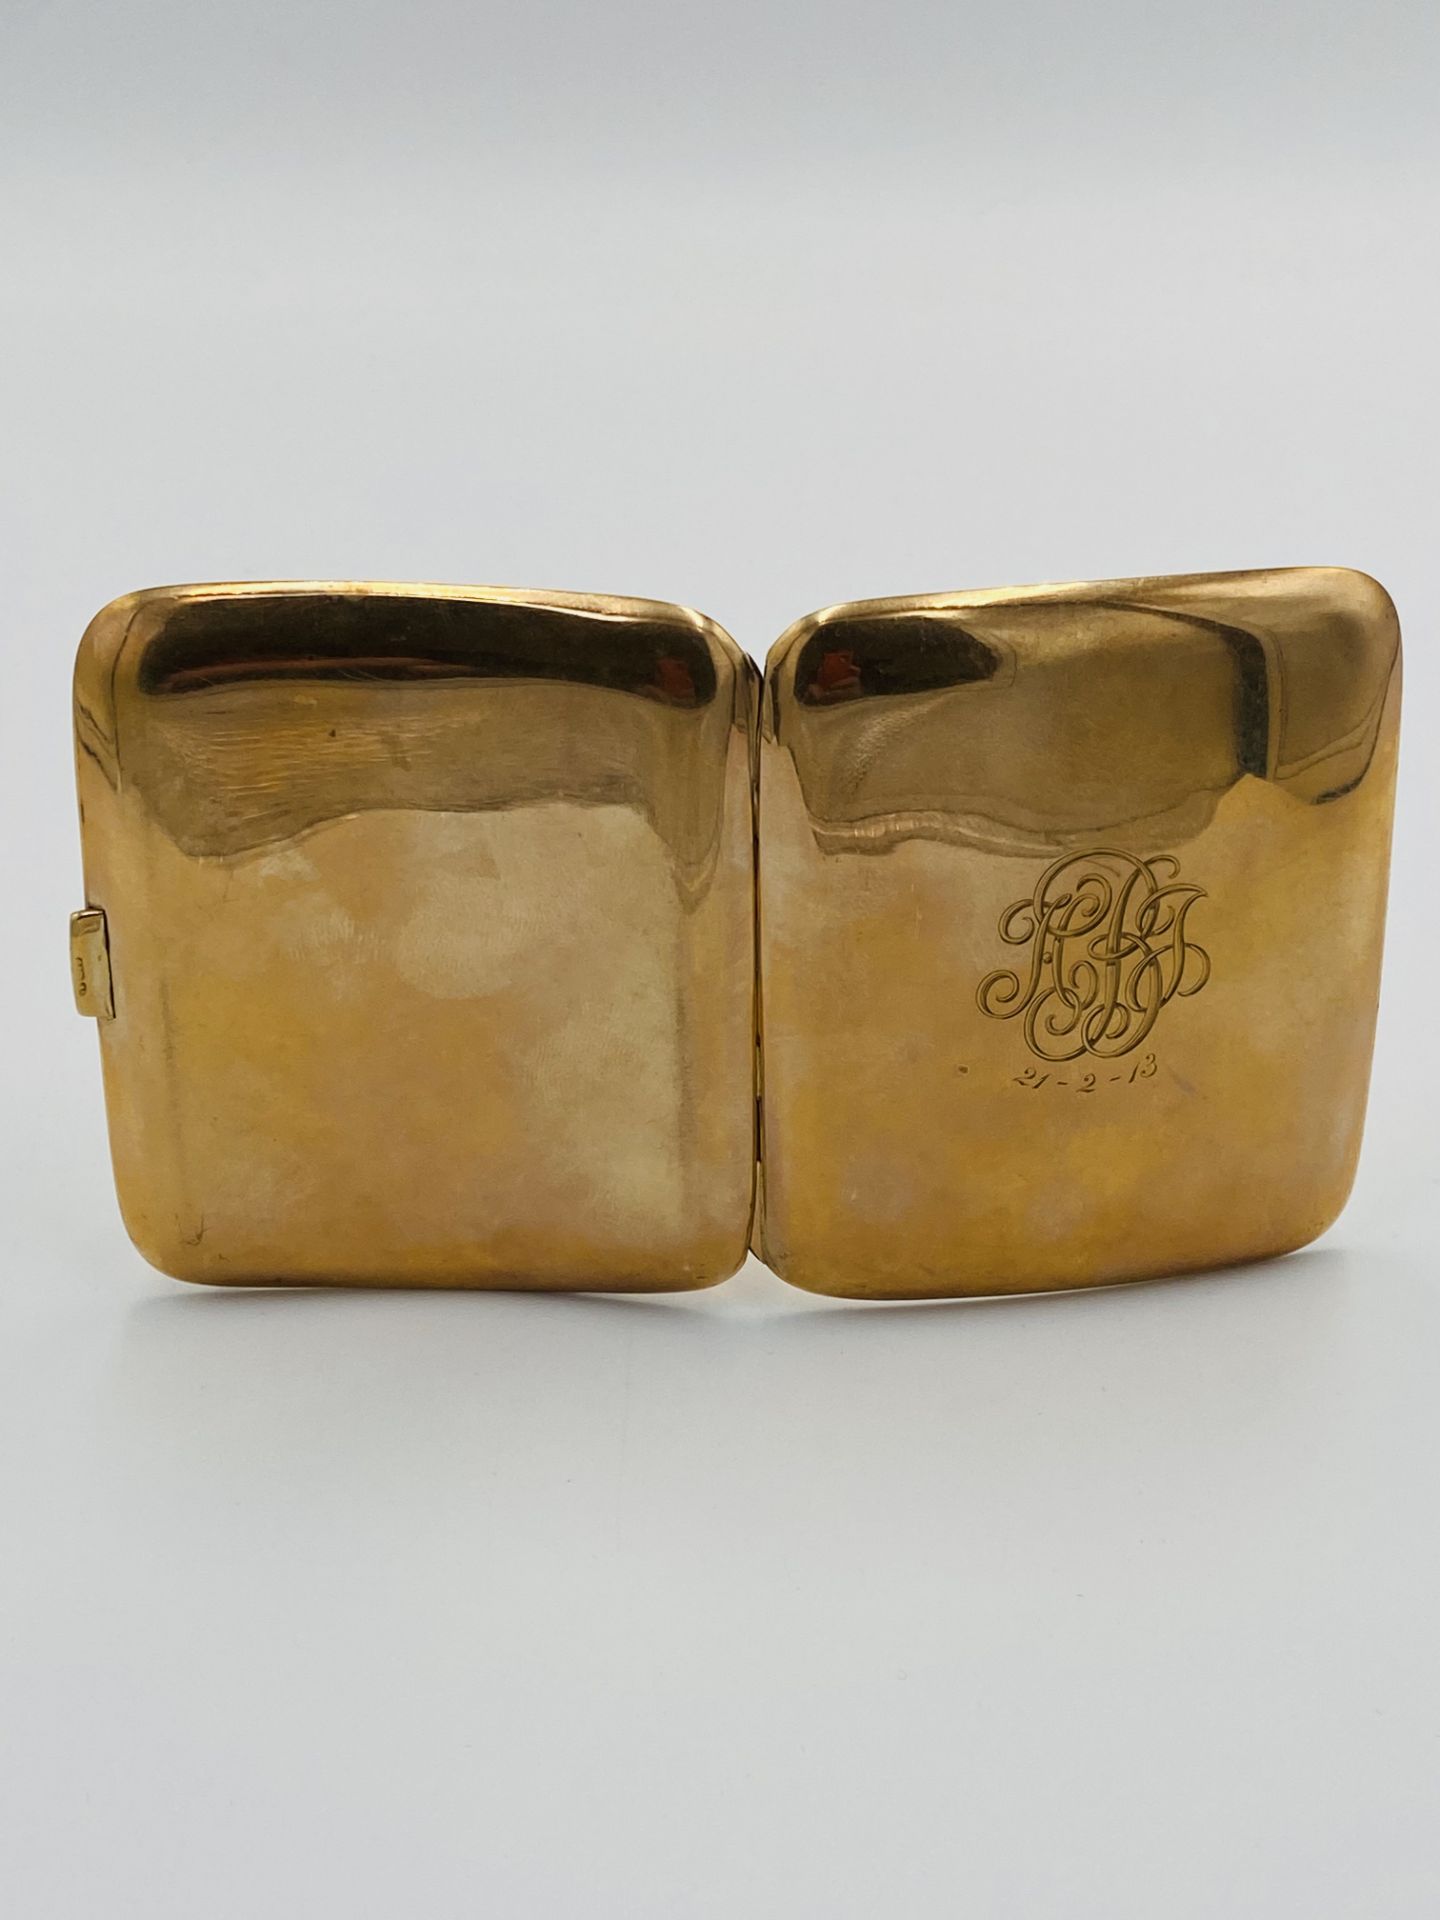 9ct gold cigarette case, 71.3g - Image 4 of 7